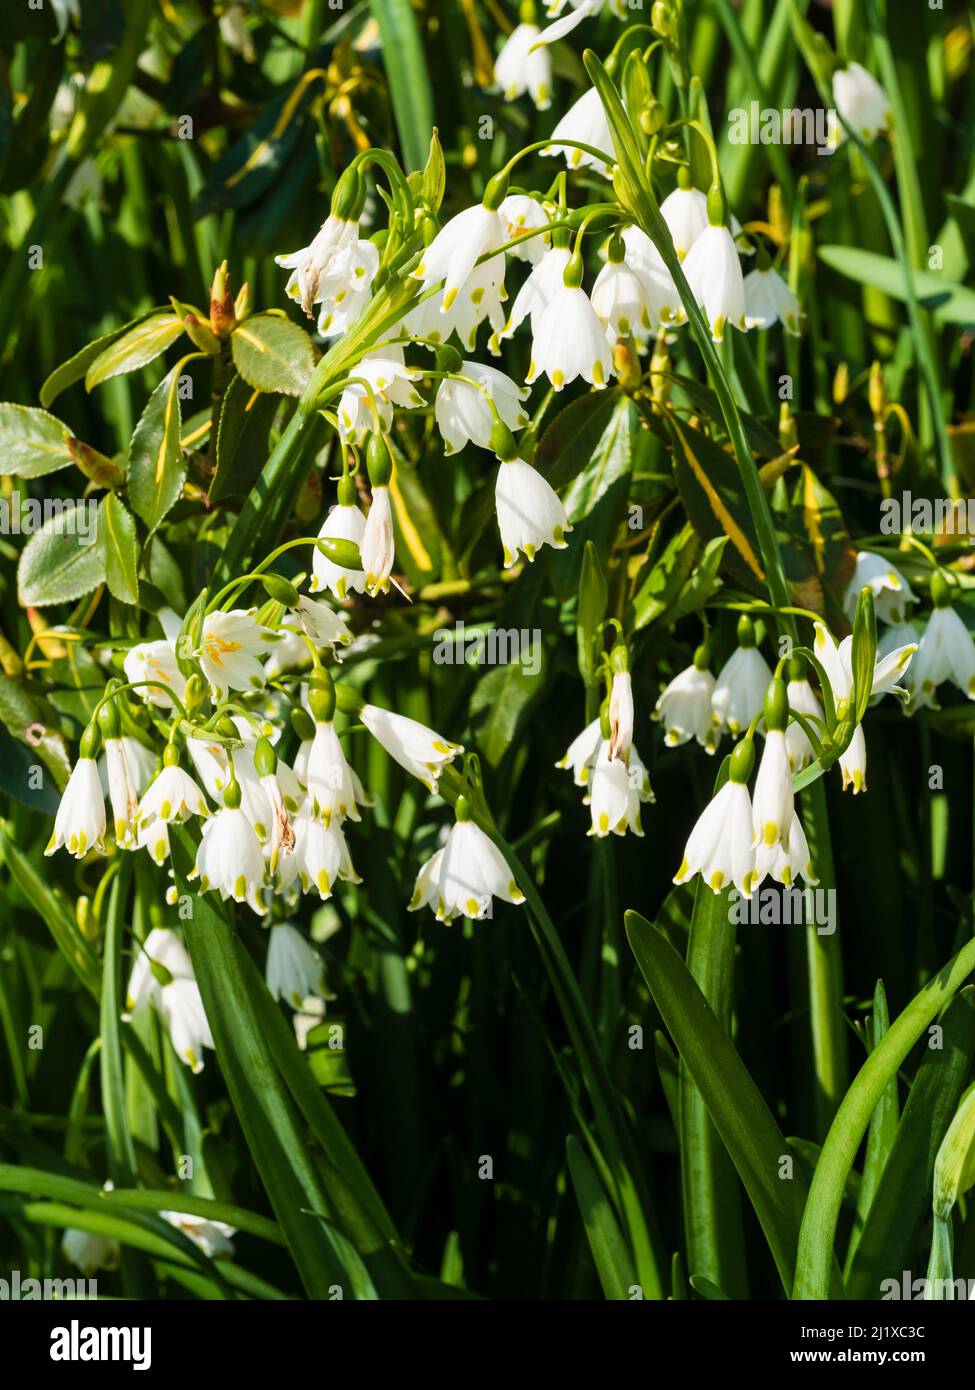 Fioriture bianche con punta gialla della primavera ardita fioritura bulbo showflake estate, Leucojum aestivum 'Gravetye Giant' Foto Stock